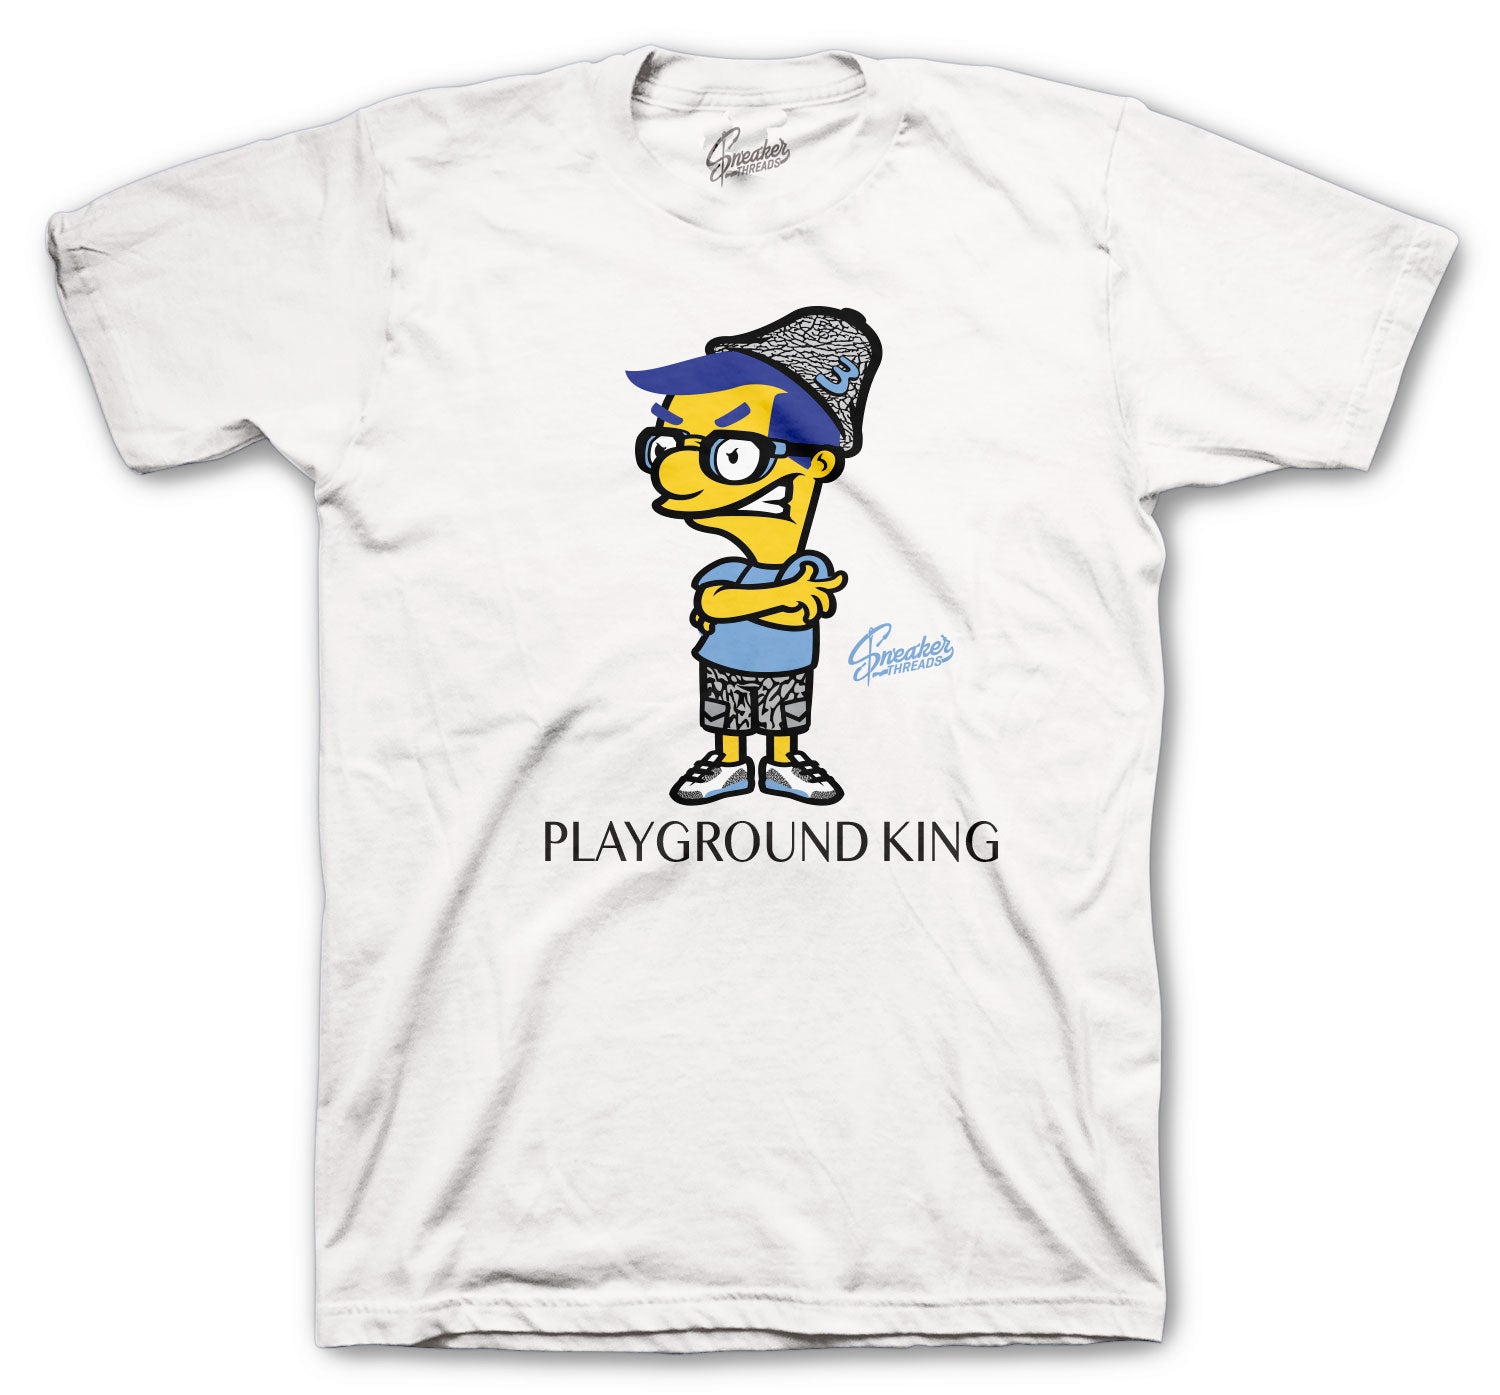 Retro 3 Valor Blue Shirt - Playground King - White